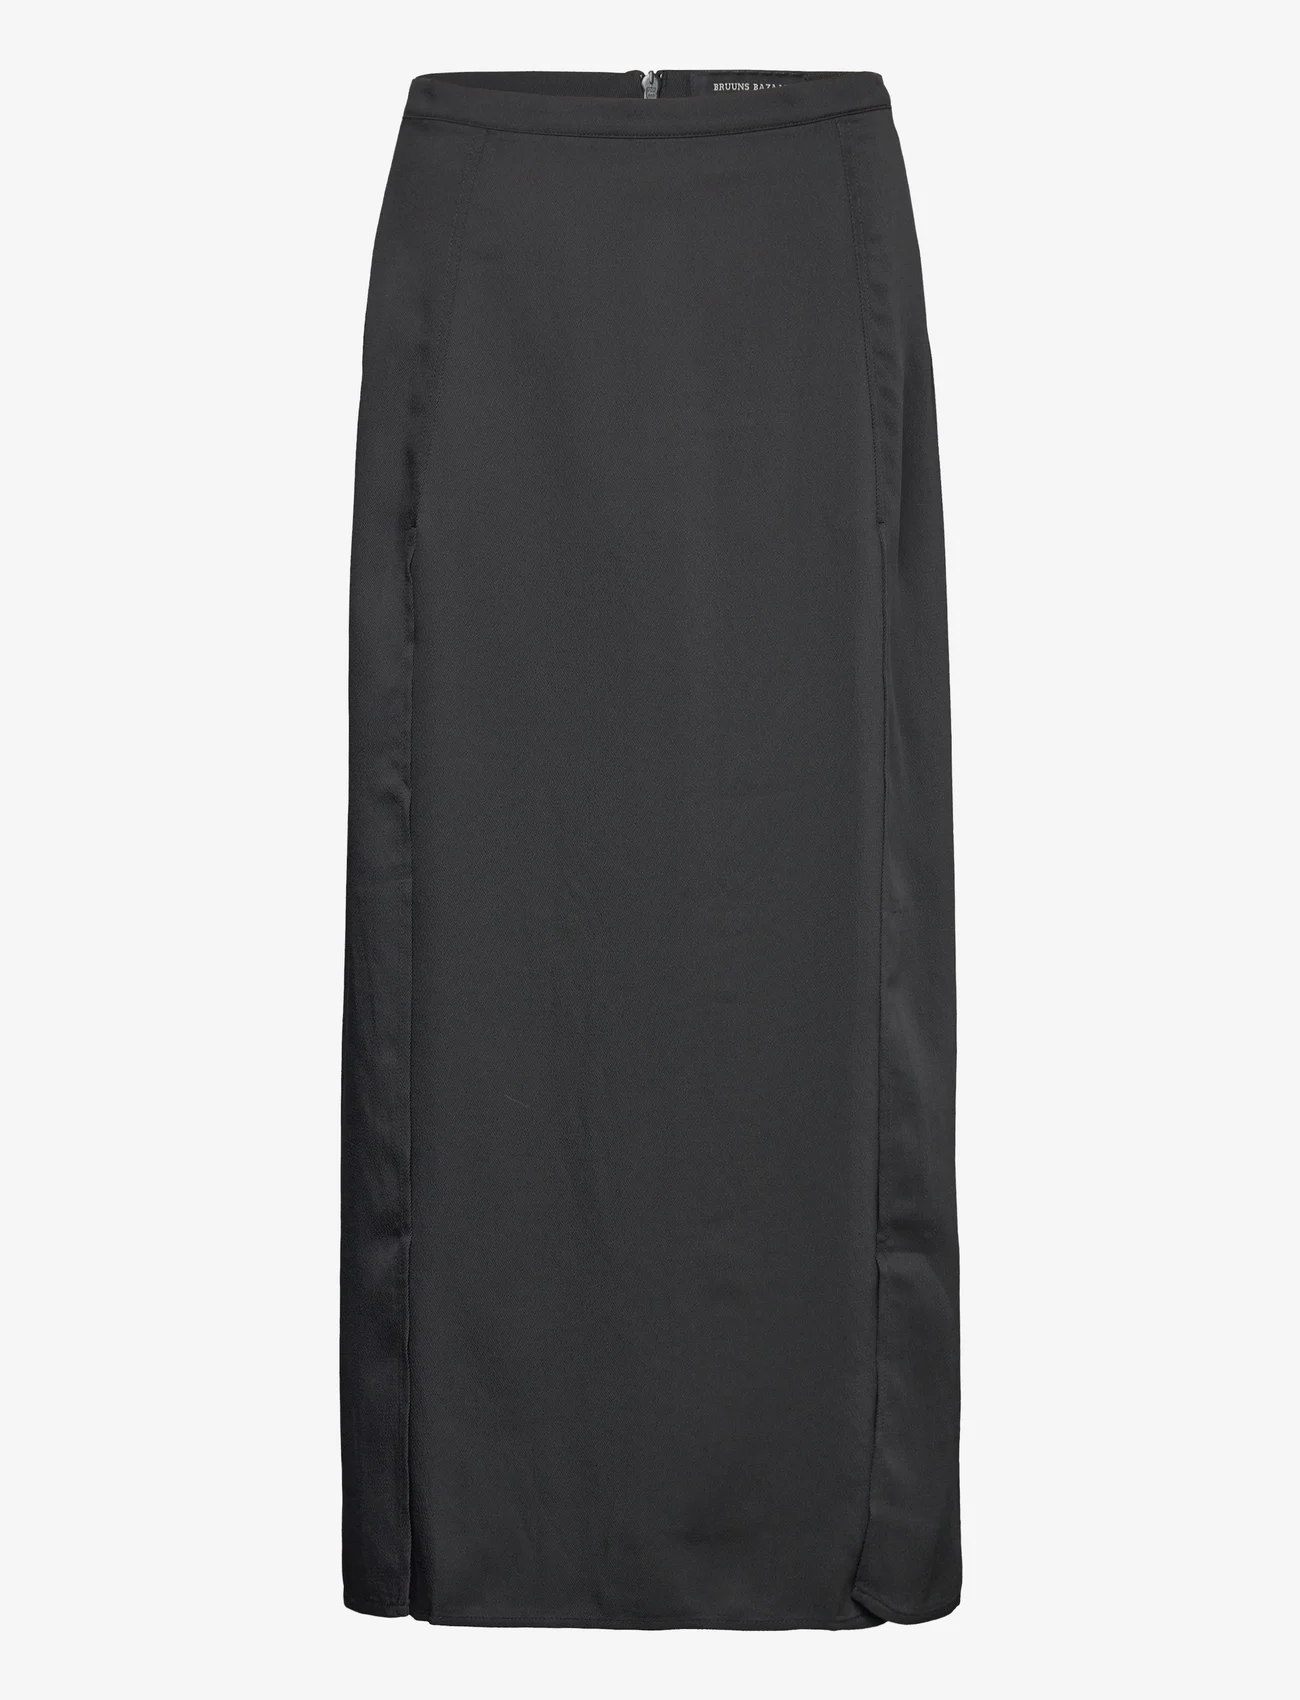 Bruuns Bazaar - CedarsBBMaian skirt - midi skirts - black - 0